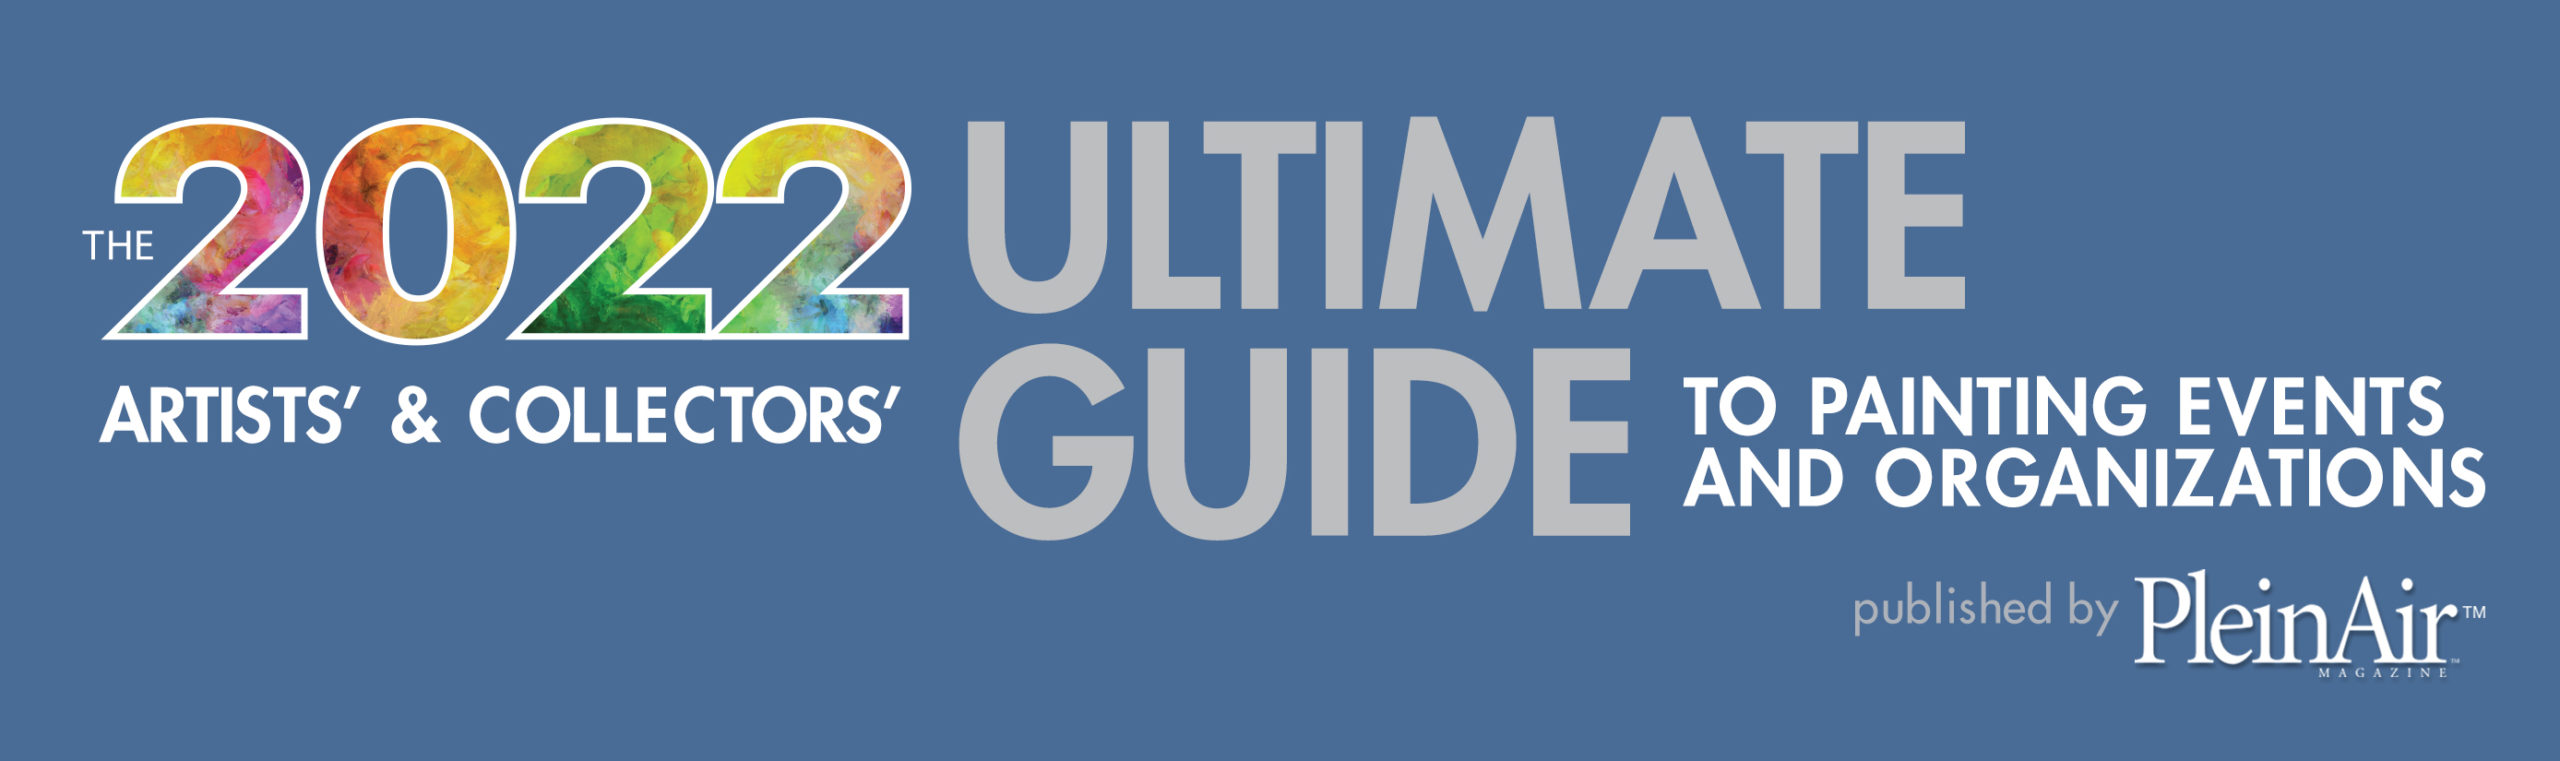 2022 Ultimate Guide PleinAir Magazine